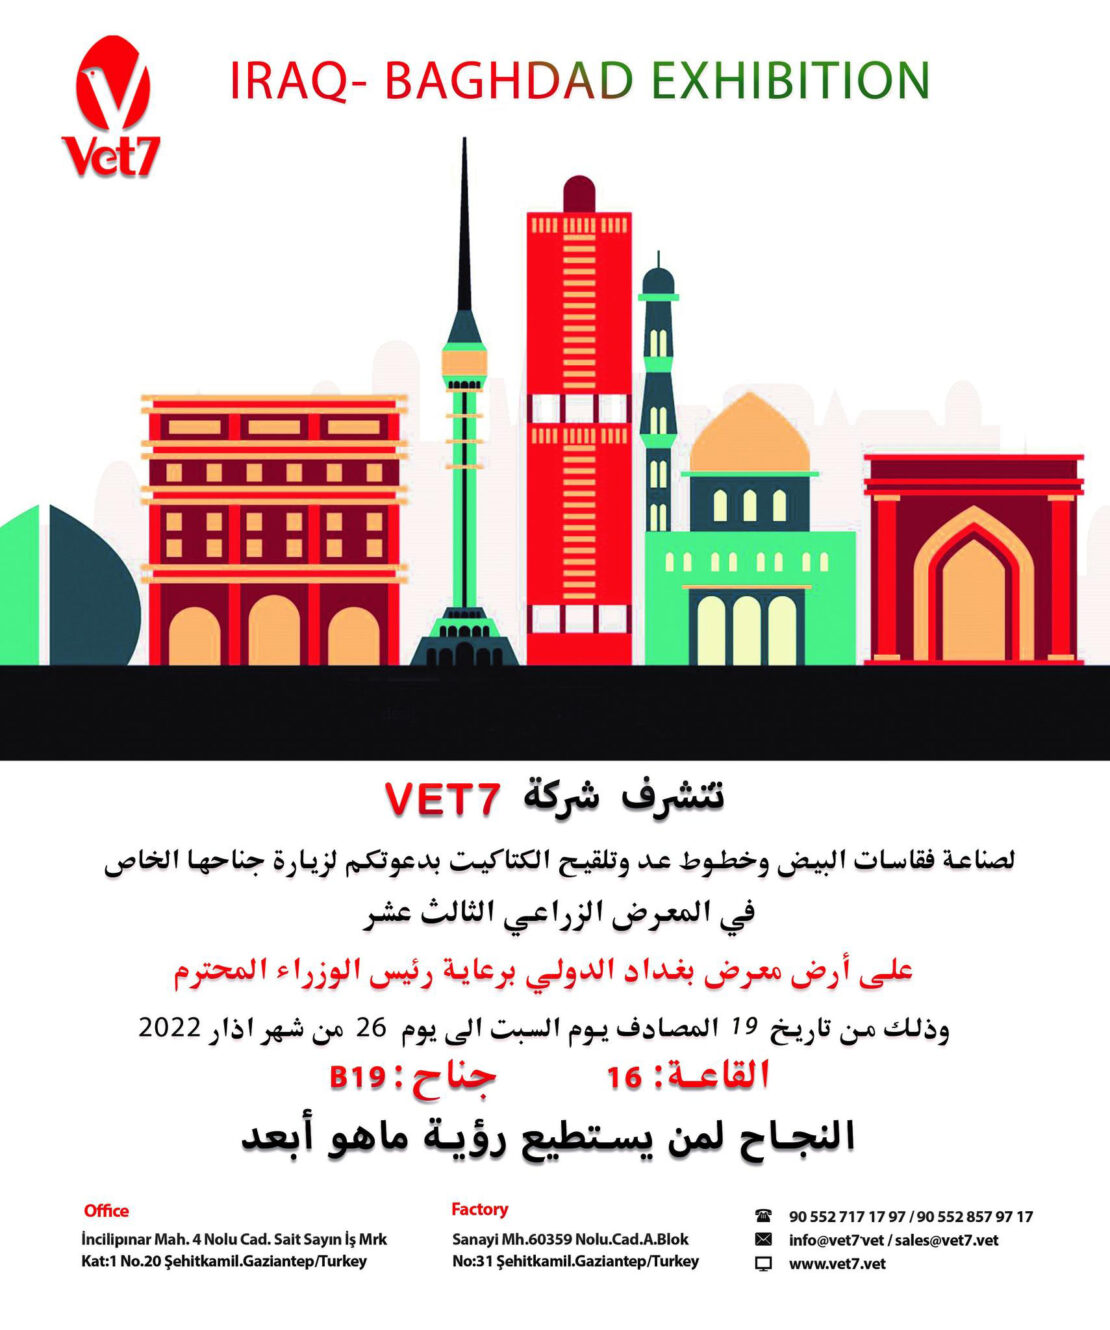 Baghdad exhibition 2022 vet7 incubators